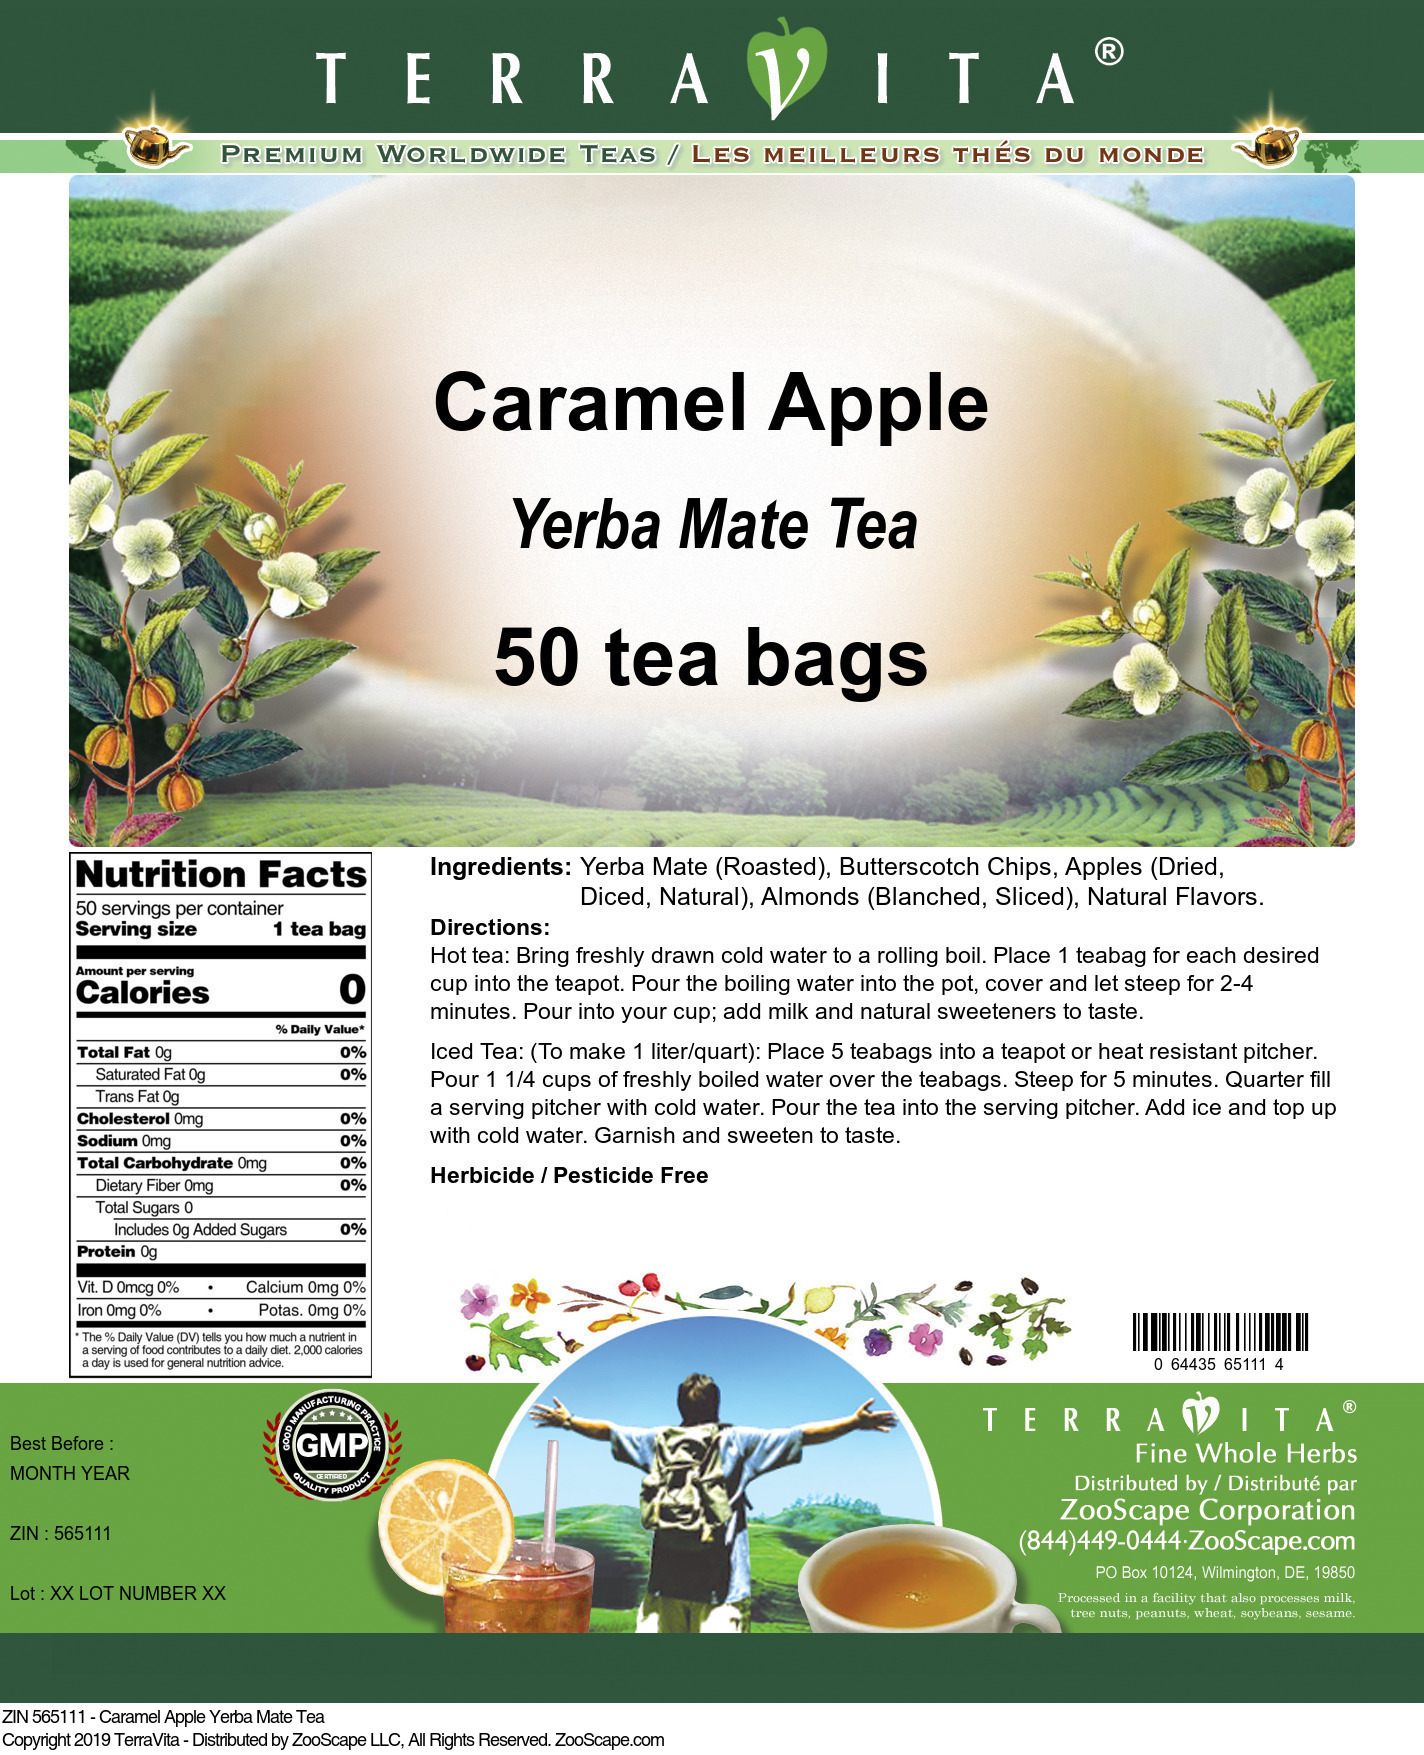 Caramel Apple Yerba Mate Tea - Label